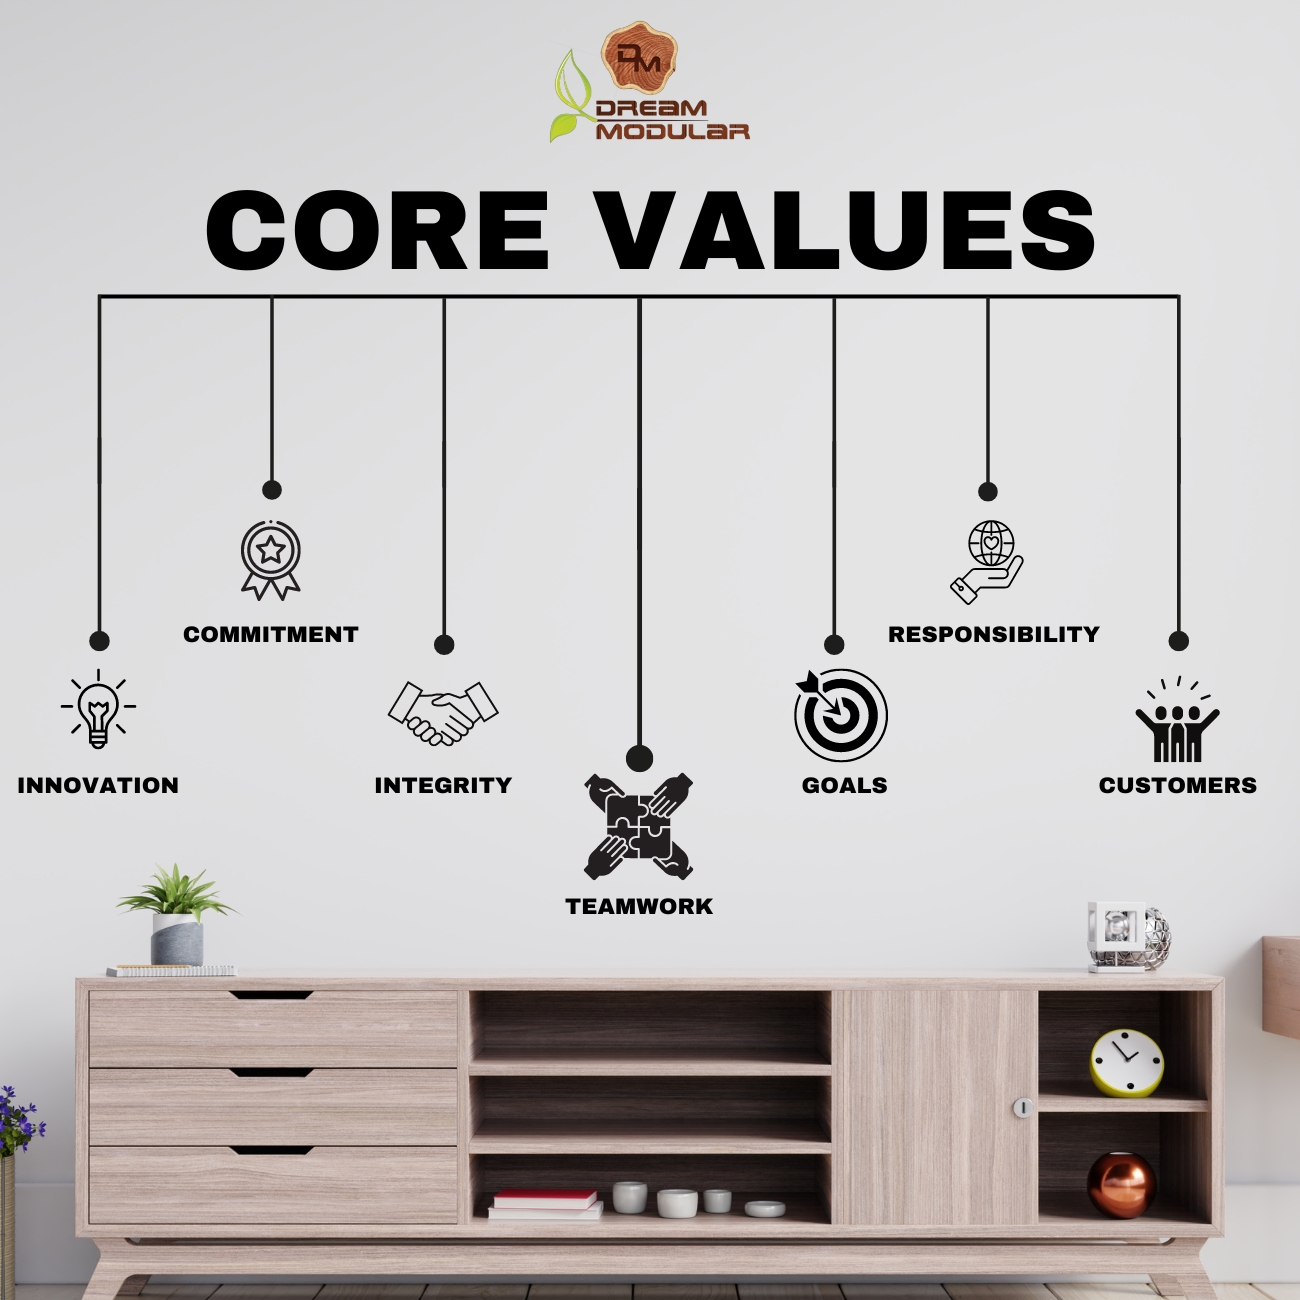 Our Dream Modular Core Values